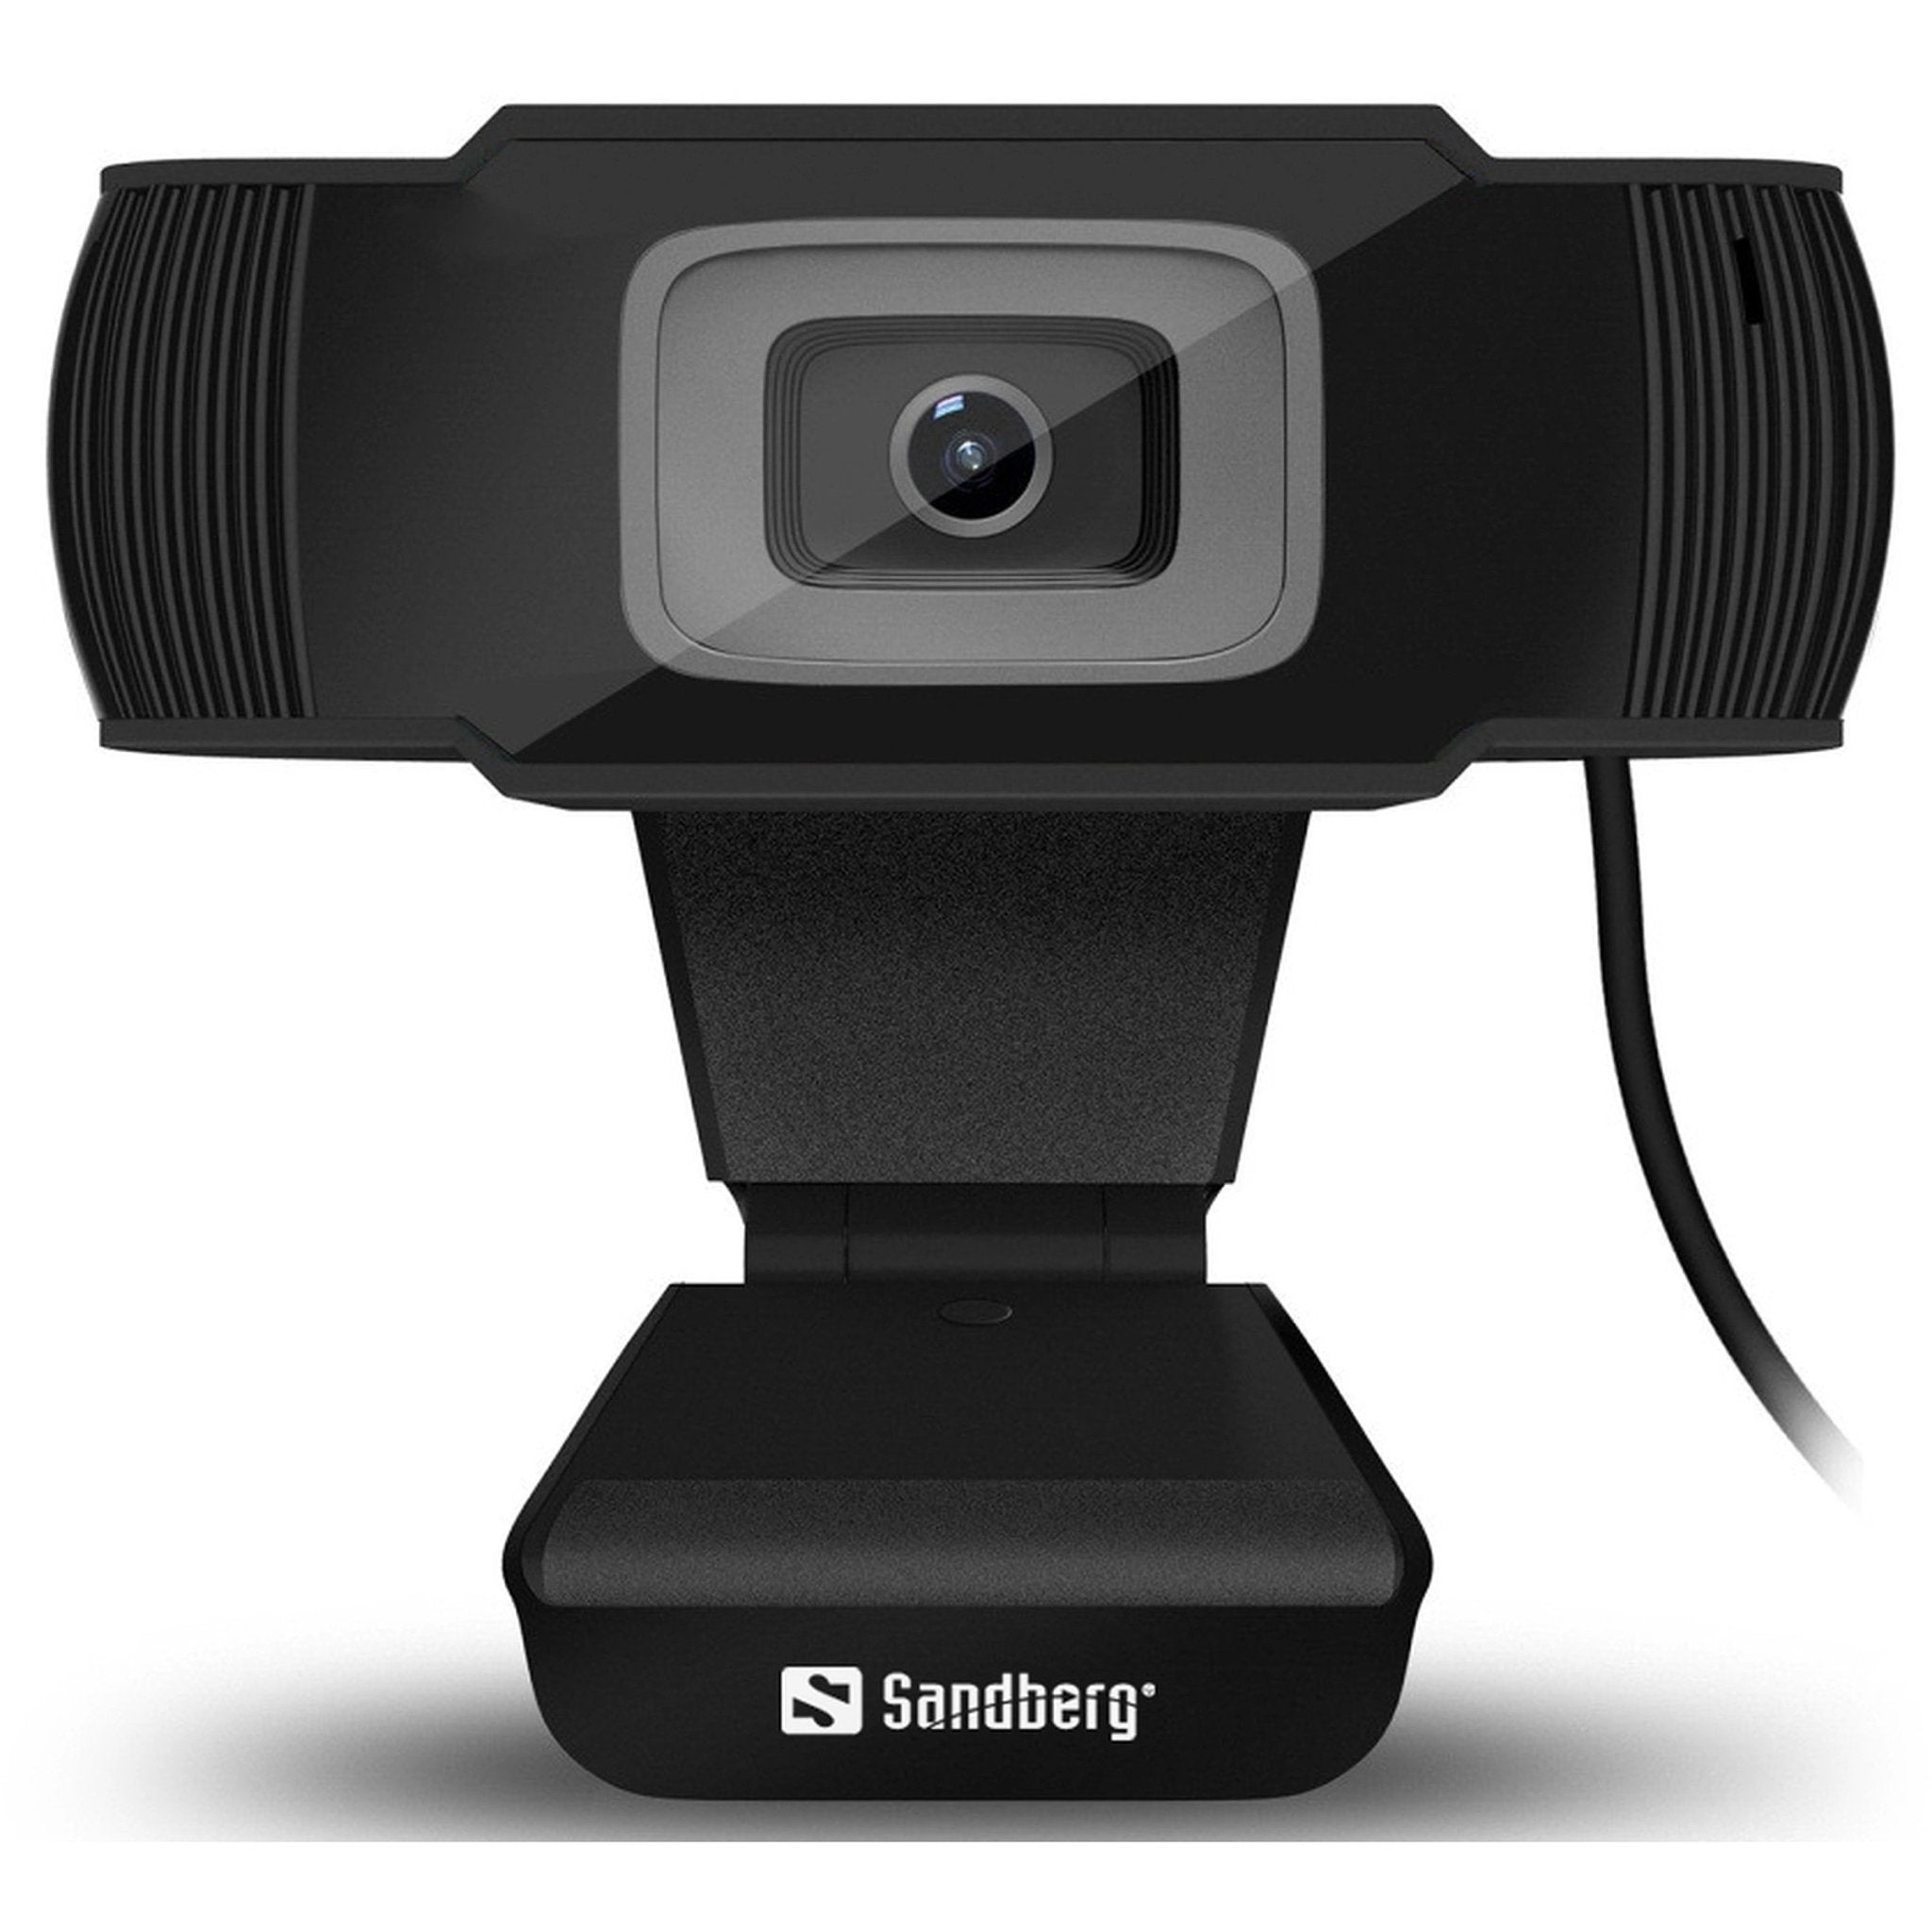 Sandberg USB Webcam 480P Saver - Store 974 | ستور ٩٧٤